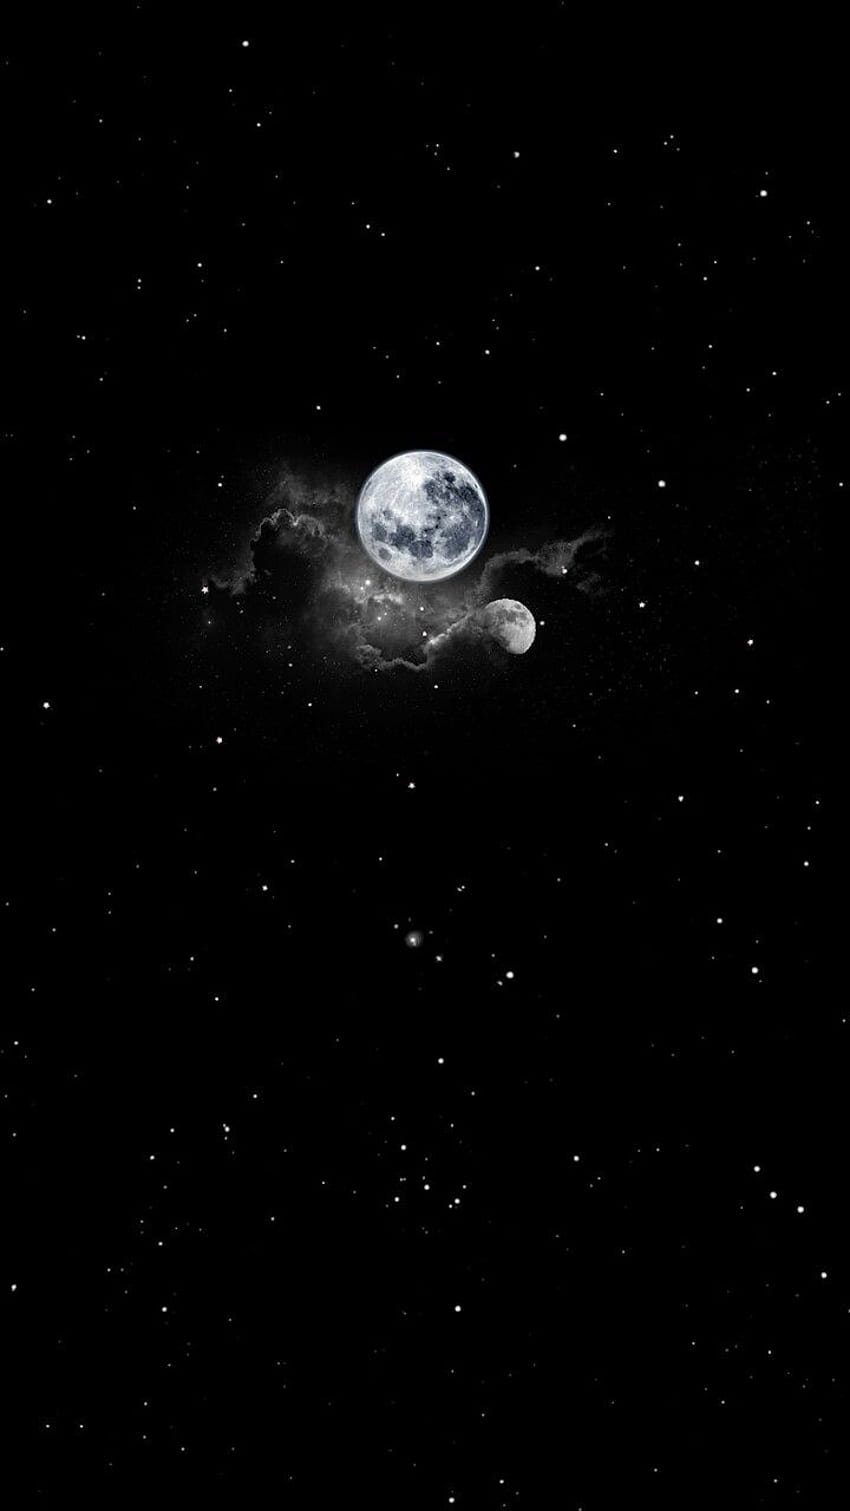 Download wallpaper 938x1668 moon night sky tree stars dark iphone  876s6 for parallax hd background